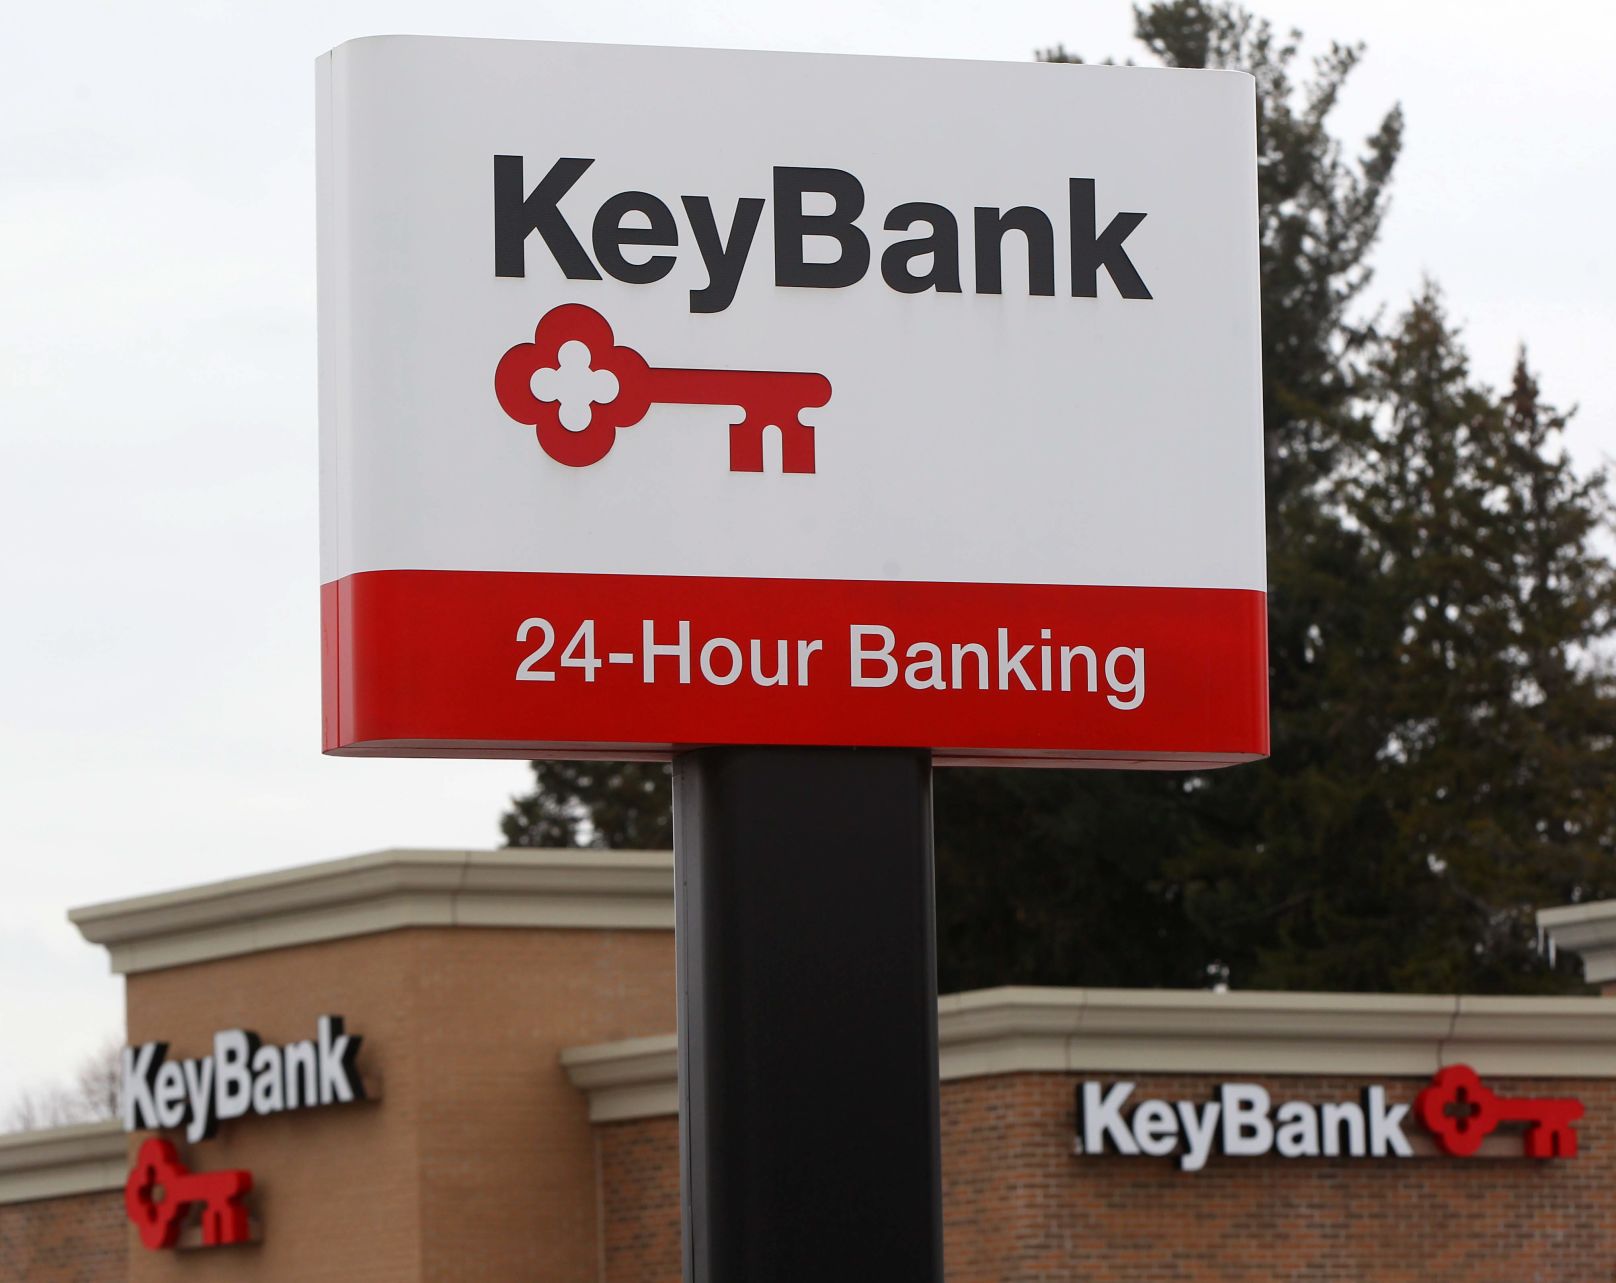 keybank business login